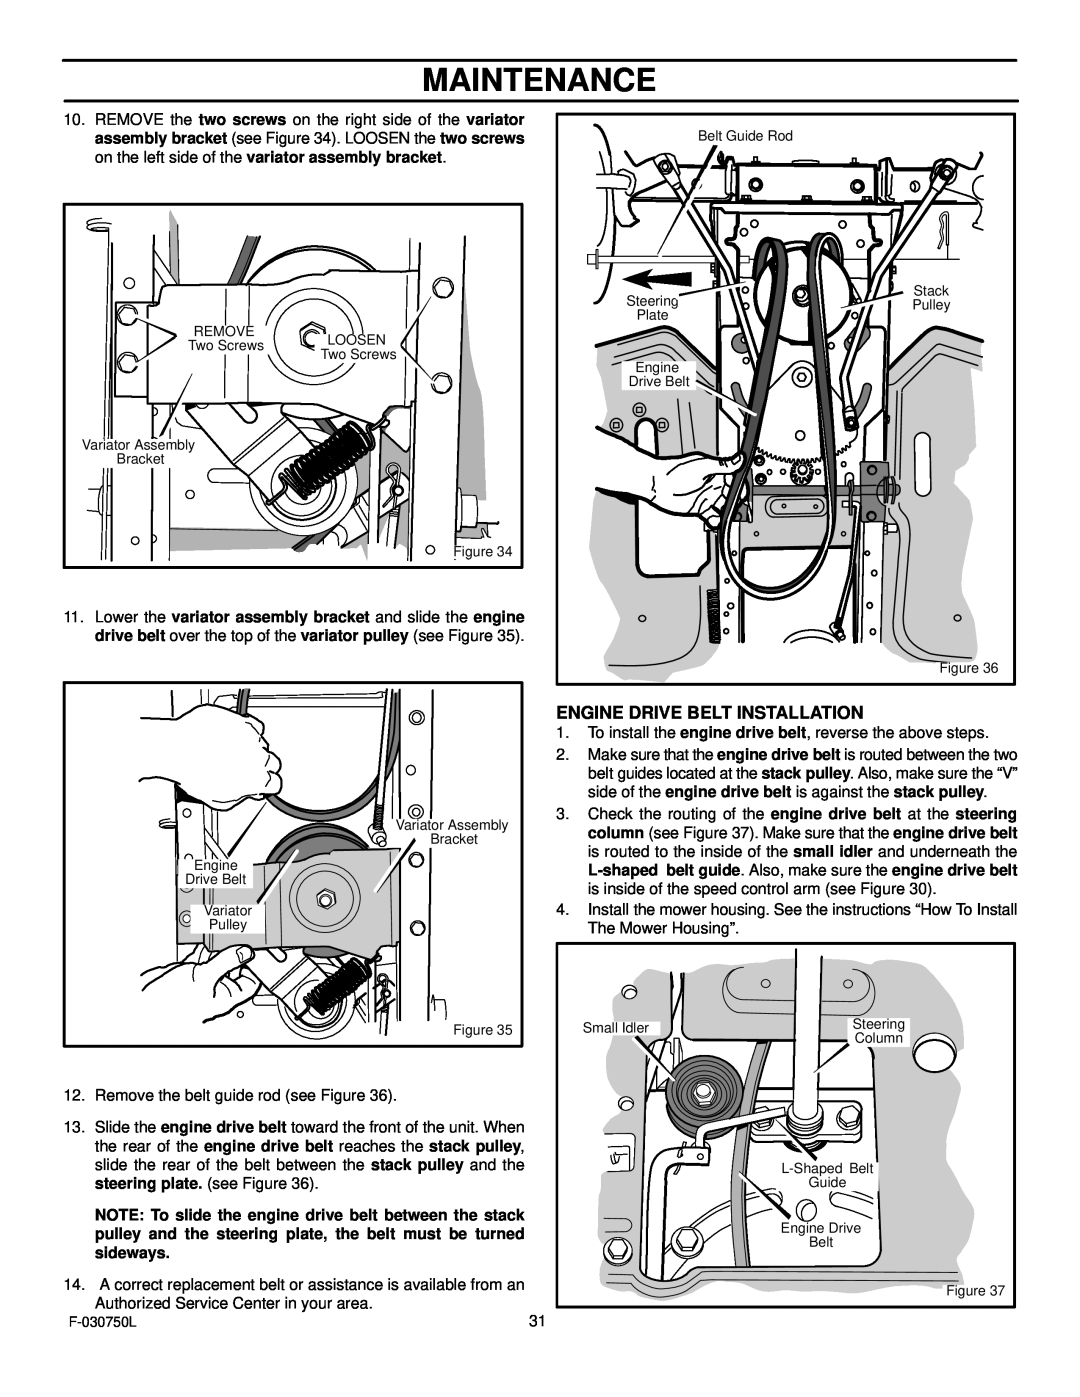 Murray 425306x48A manual Maintenance, Engine Drive Belt Installation 